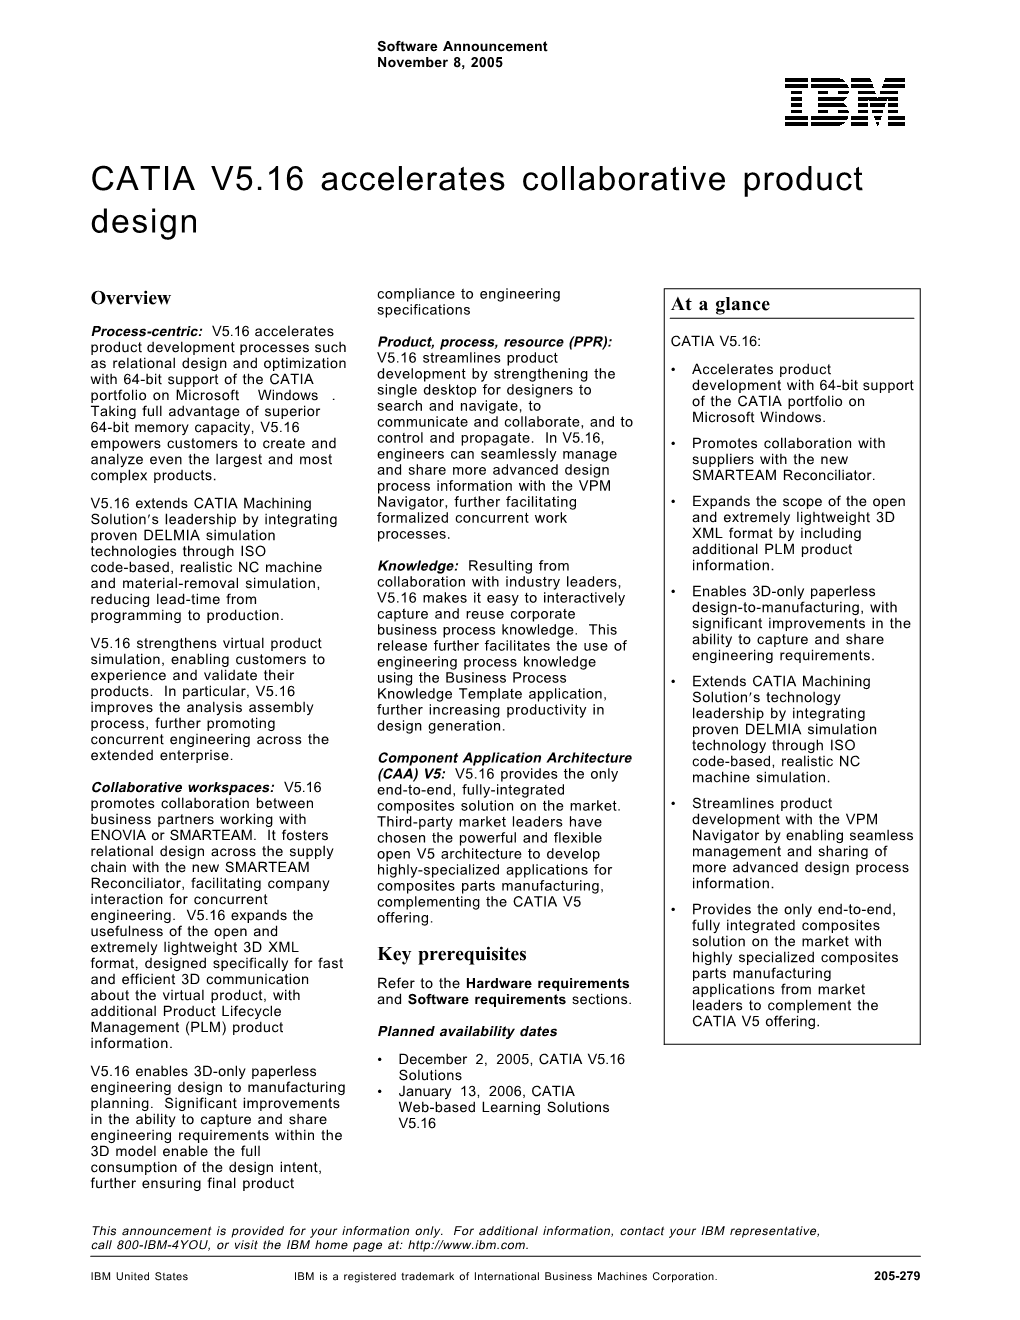 CATIA V5.16 Accelerates Collaborative Product Design